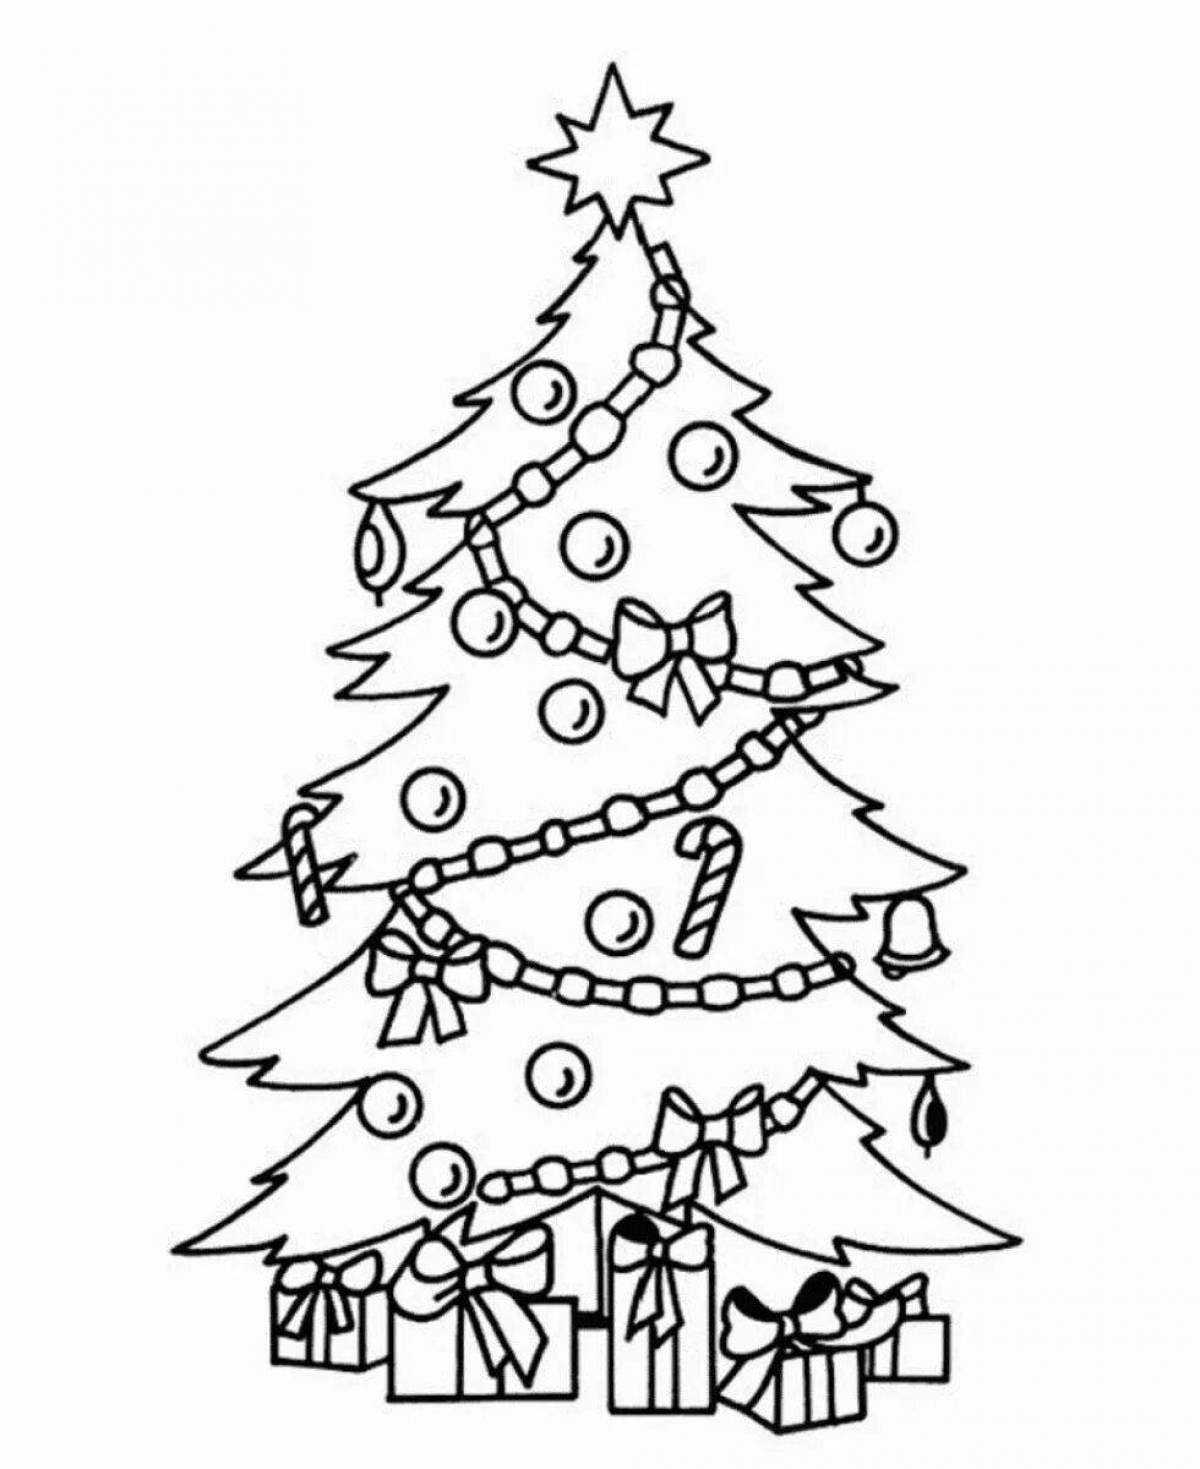 Christmas tree holiday coloring book